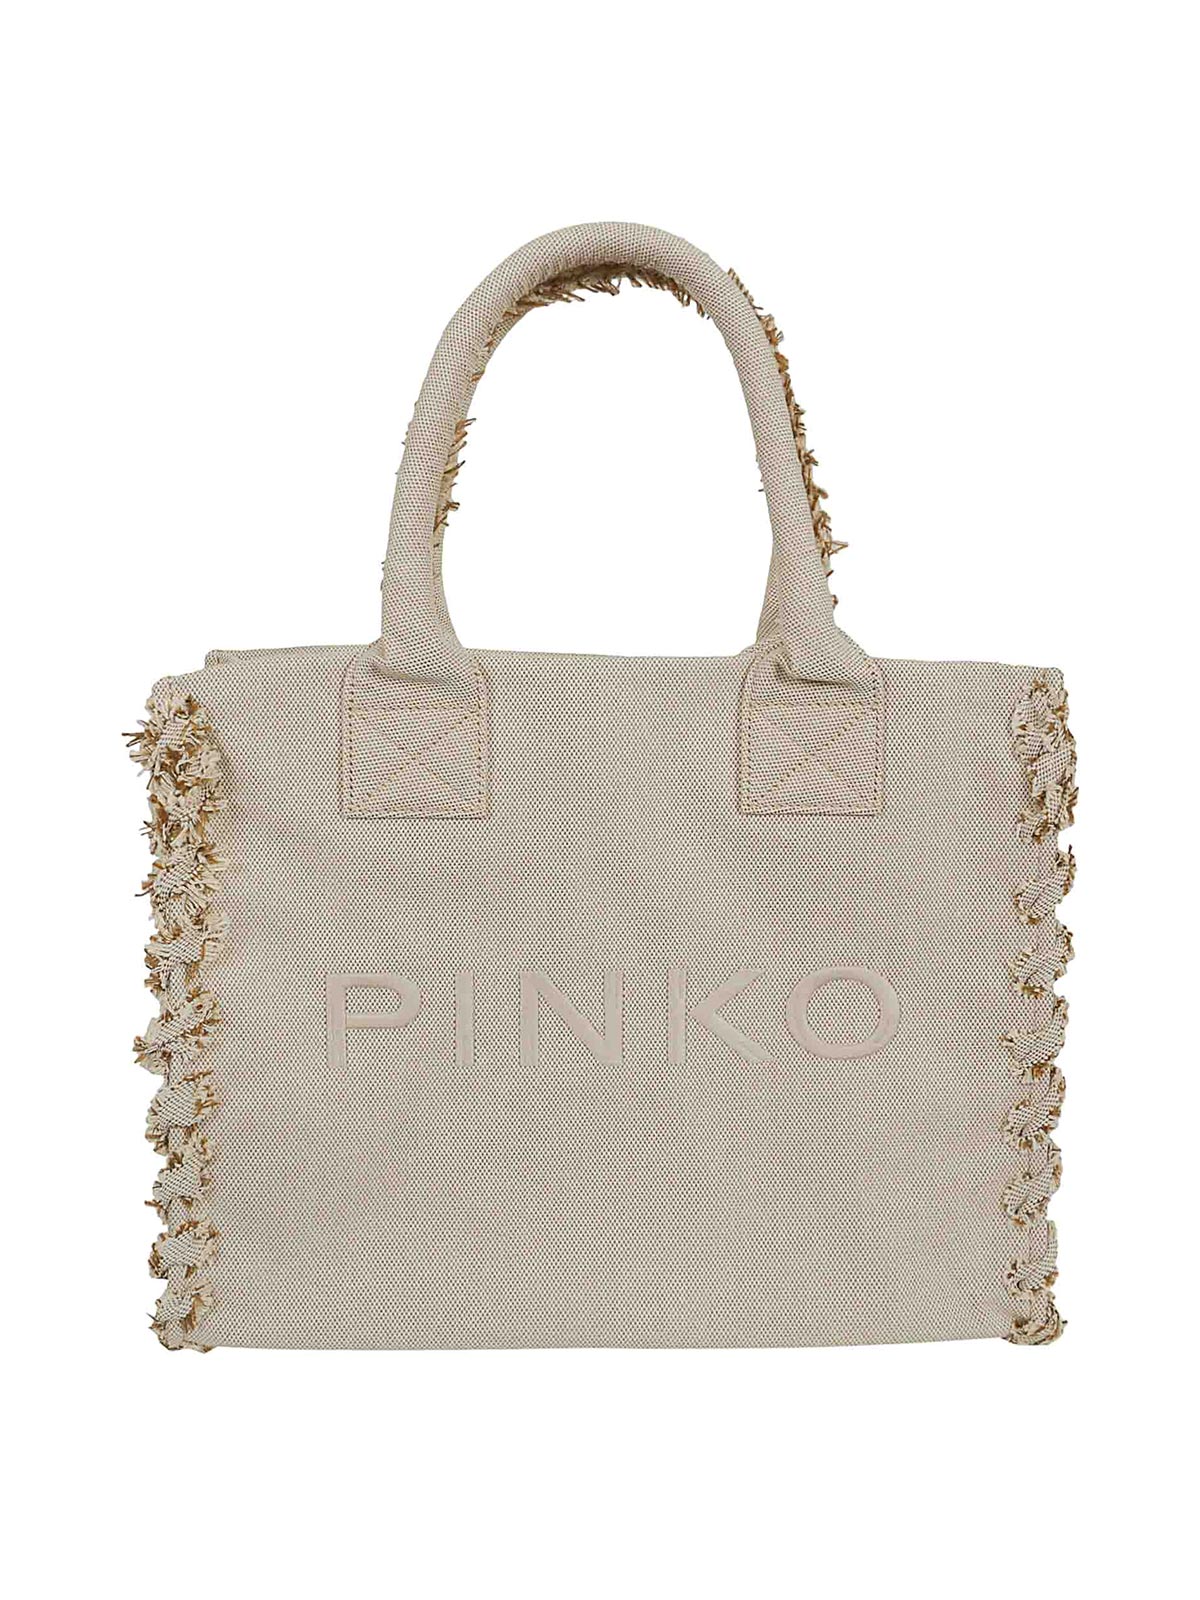 Pinko Beach Shopper Bag In Light Beige